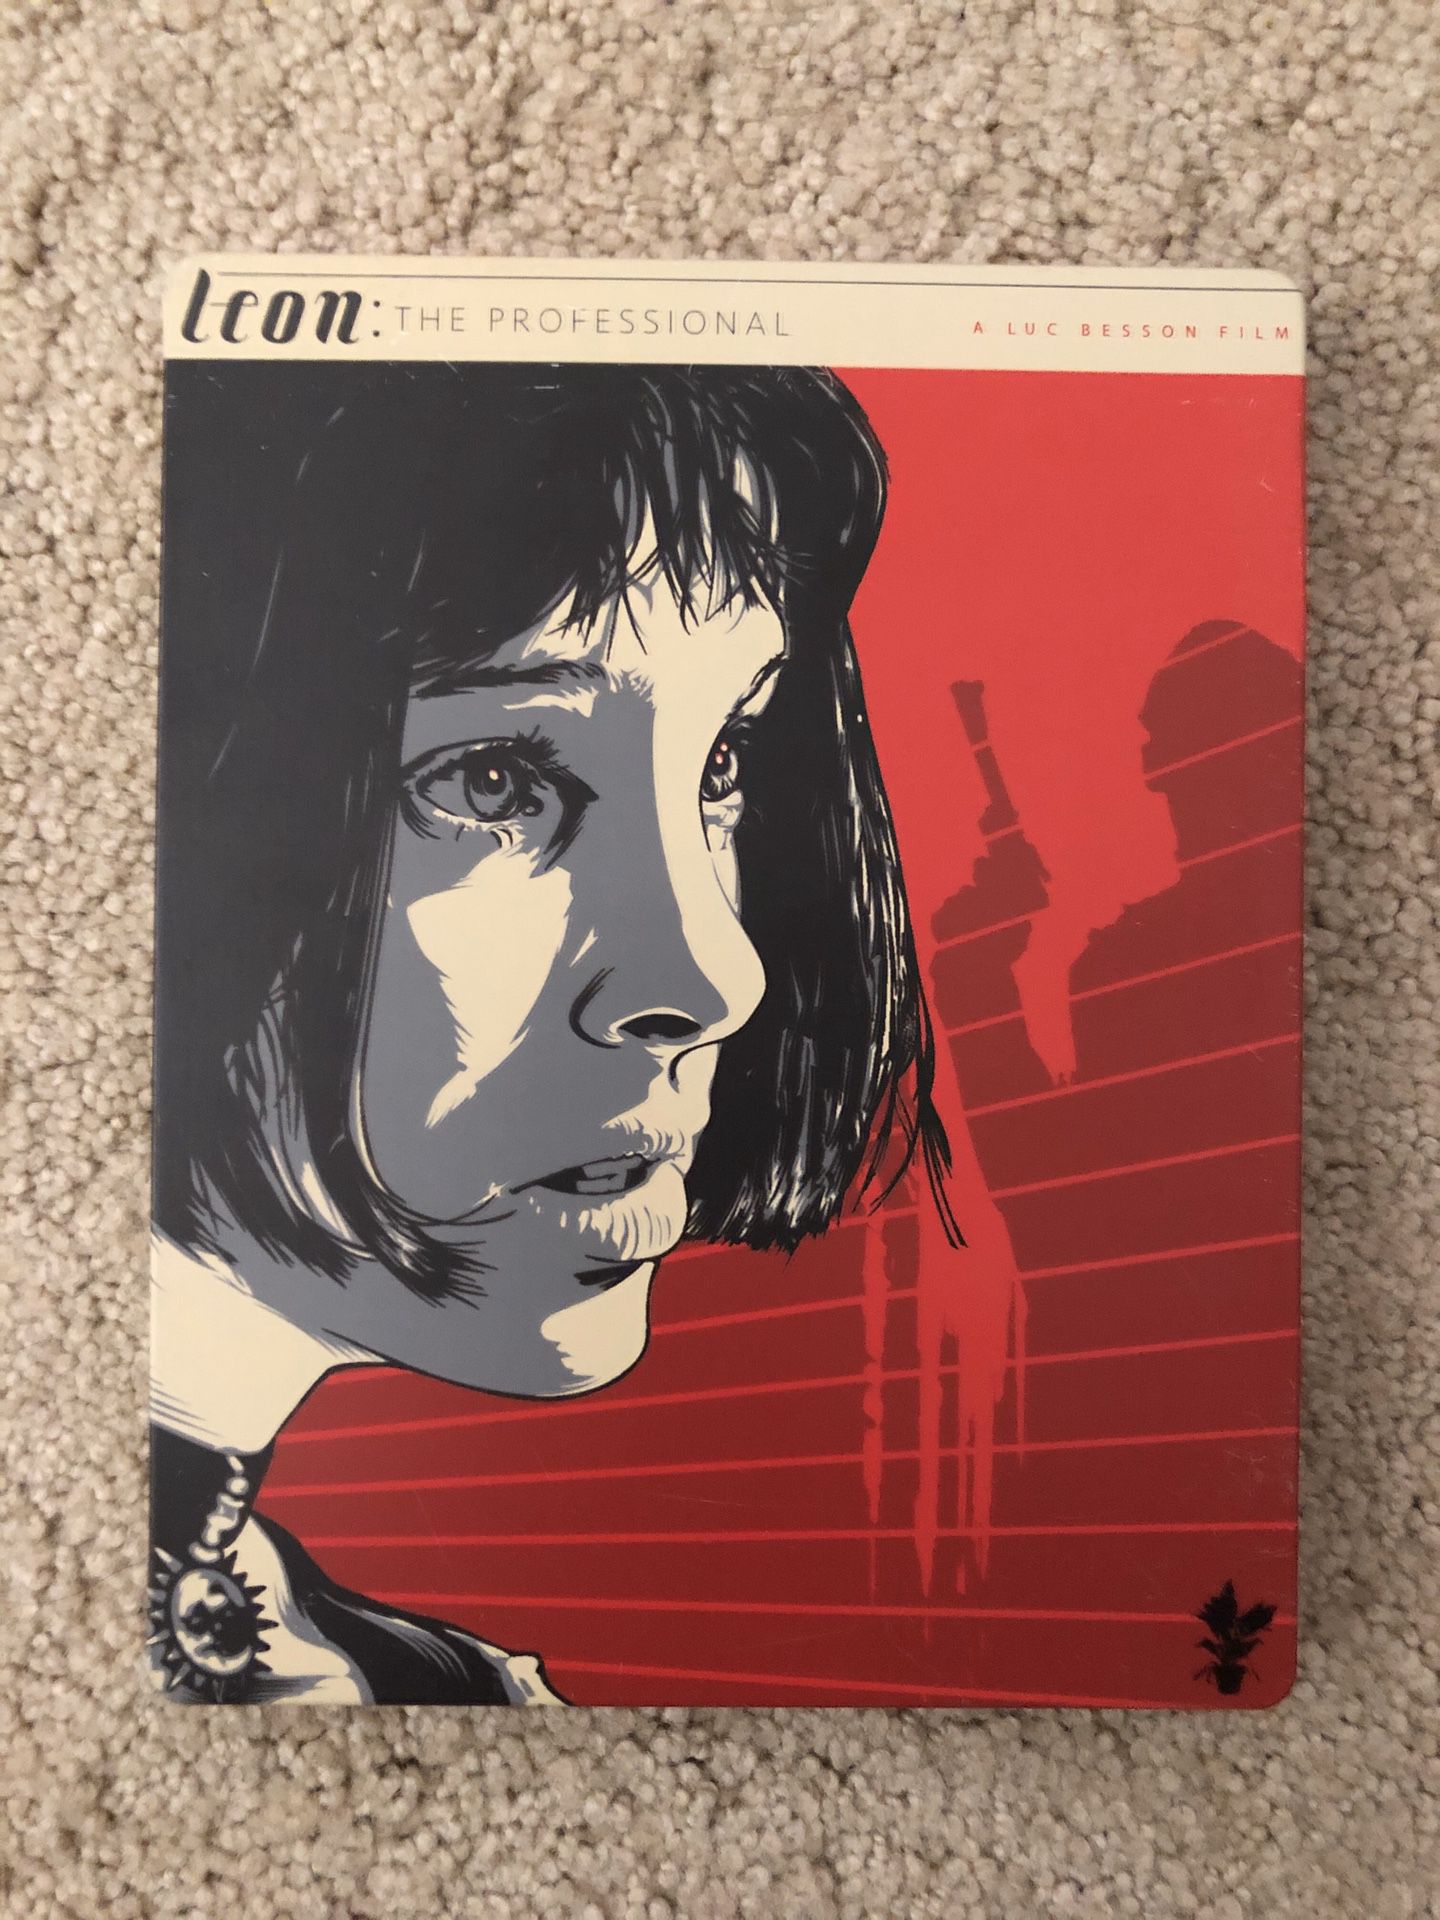 Leon The Professional Blu-Ray Steelbook